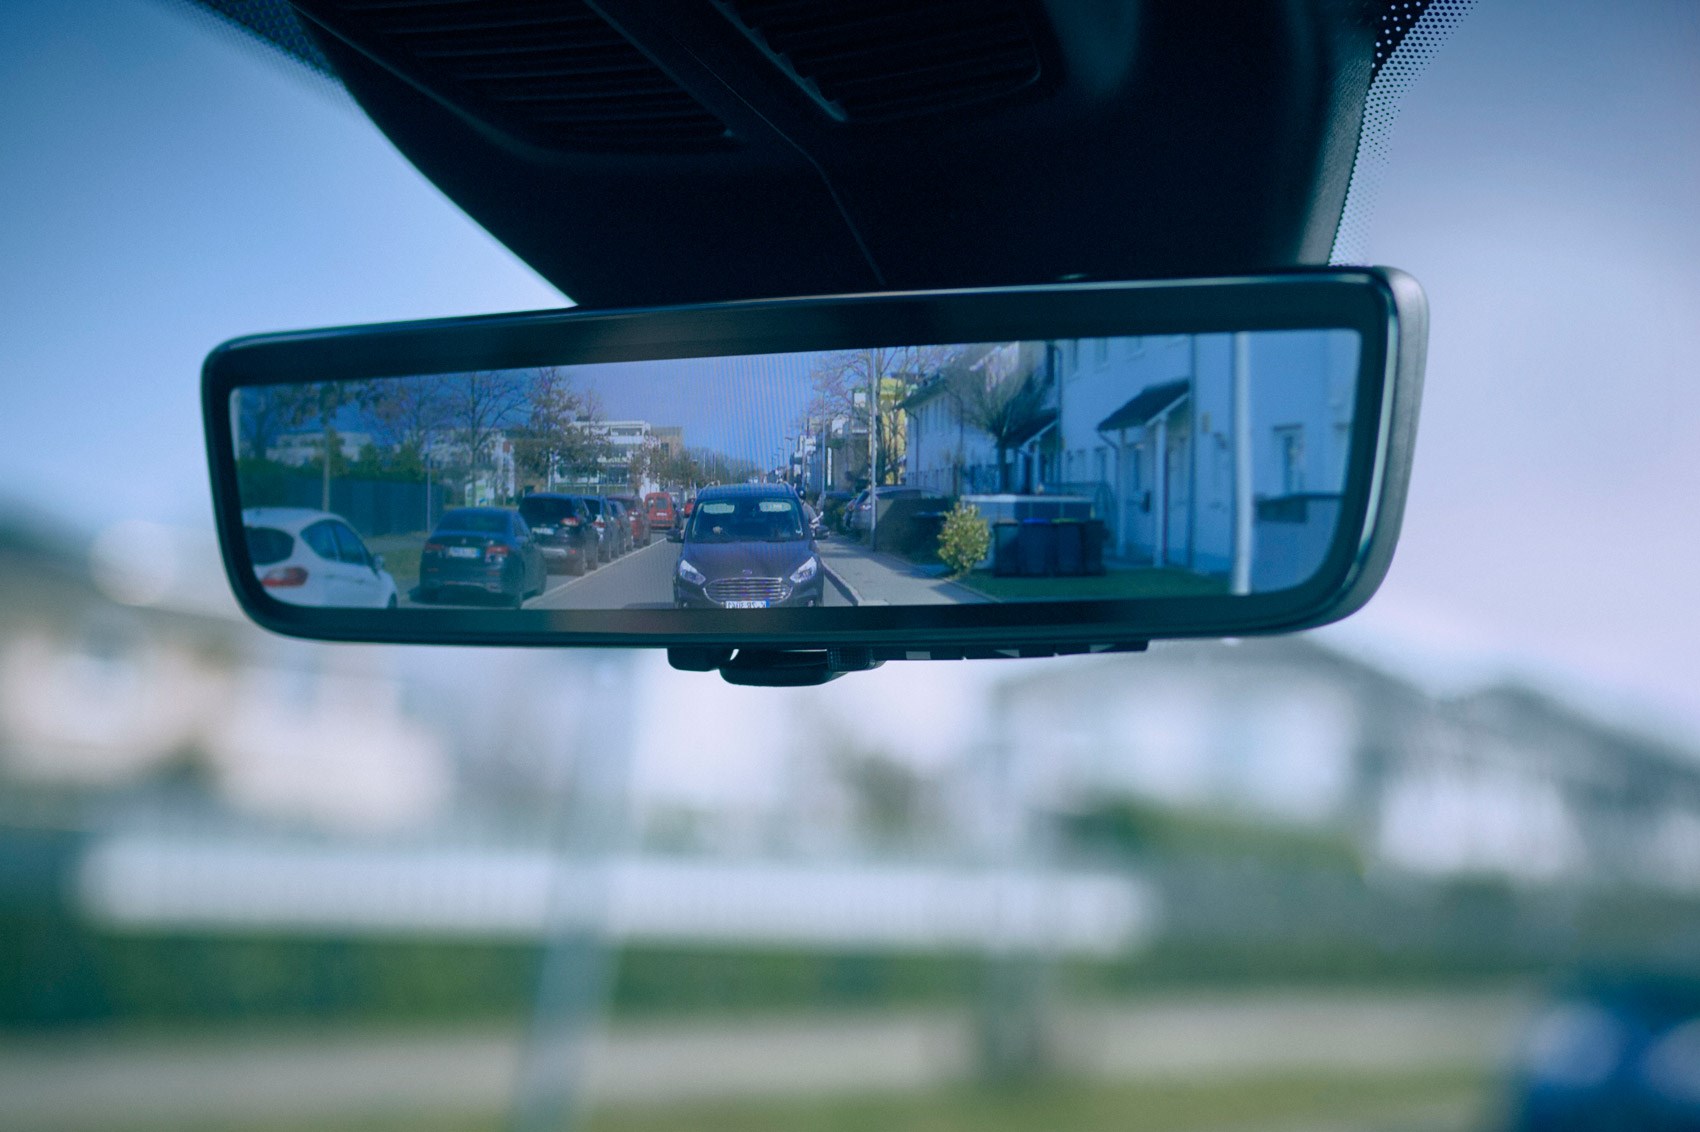 Ford Smart Mirror display screen, 2021